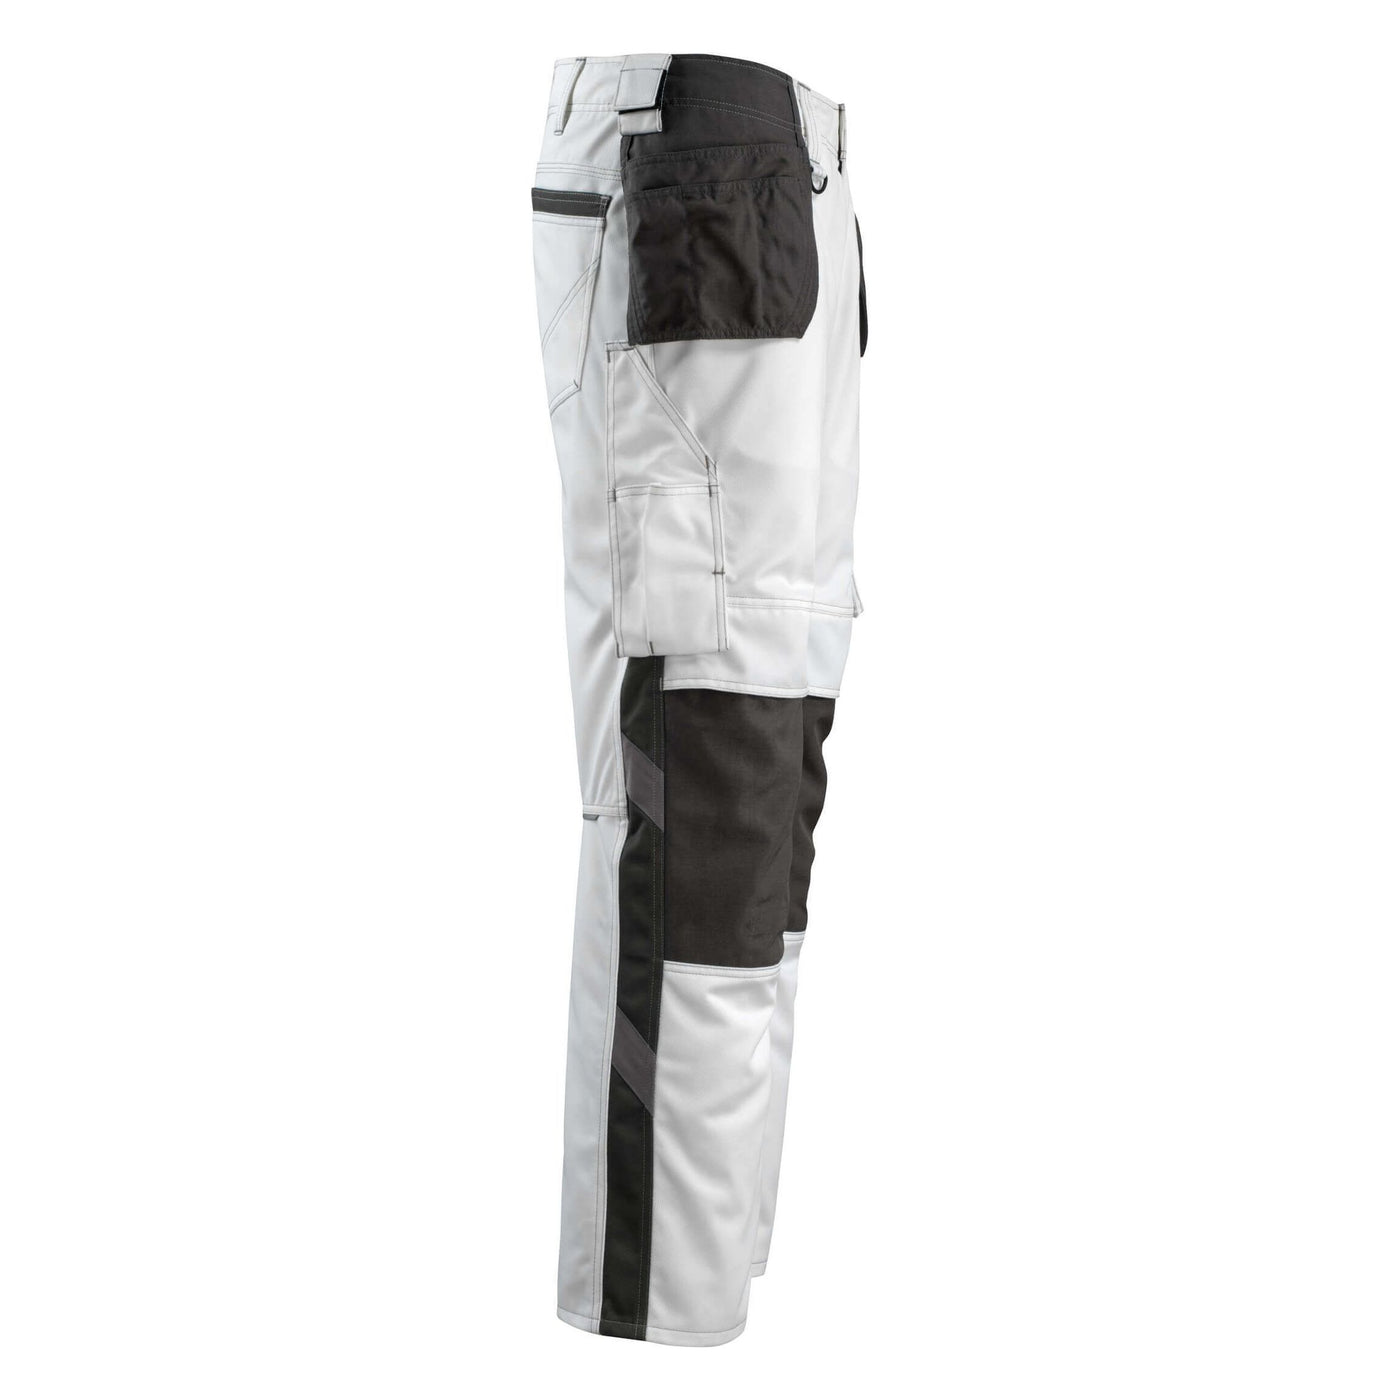 Mascot Bremen Knee-pad-Trousers Holster-Pockets 14031-203 Left #colour_white-dark-anthracite-grey